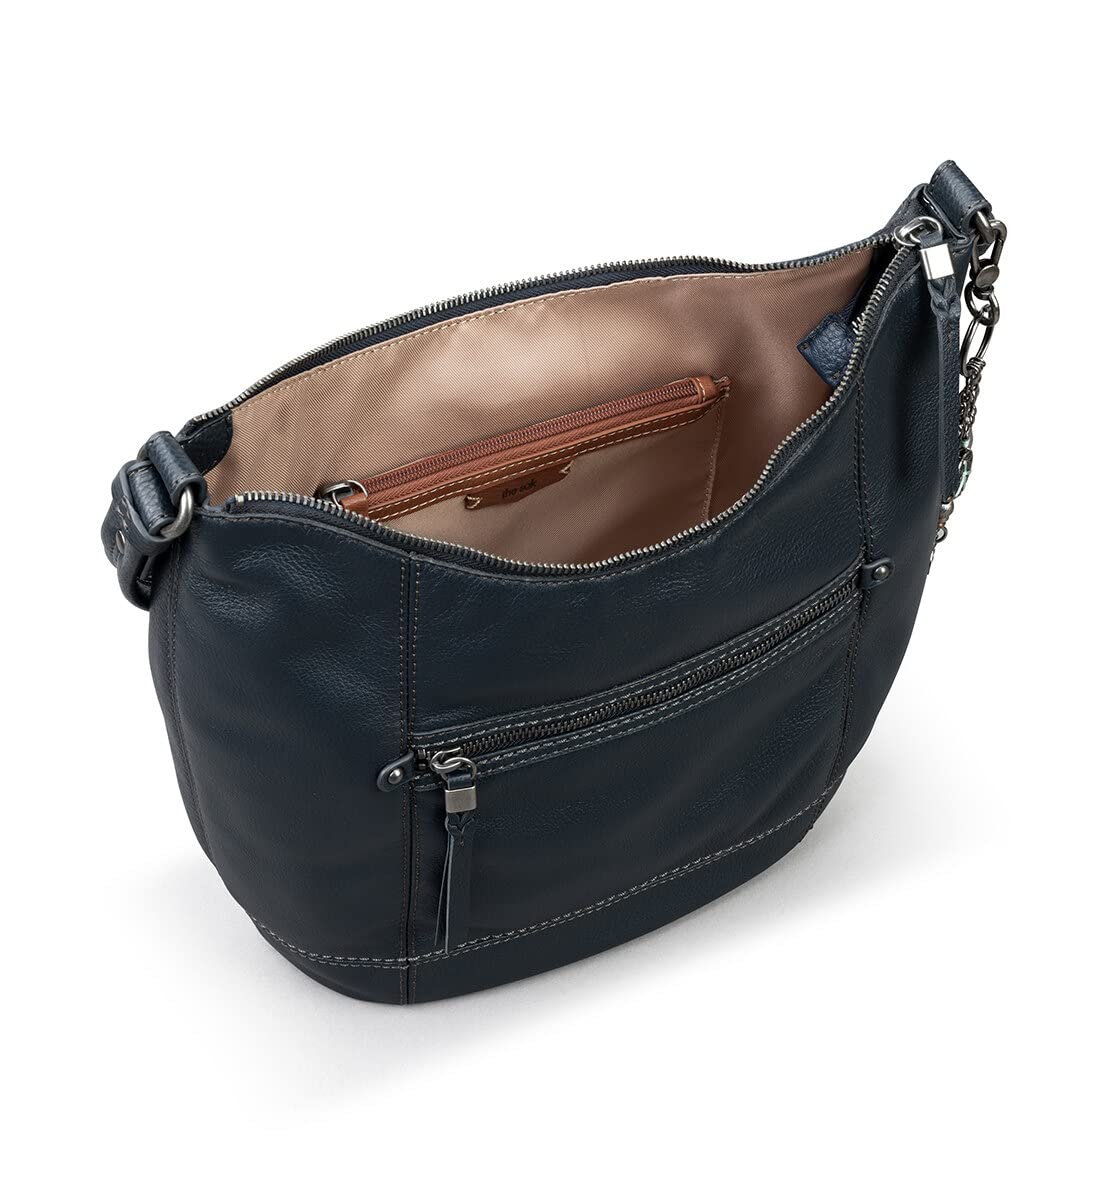 The Sak Sequoia Hobo Bag in Leather, Single Shoulder Strap, Indigo